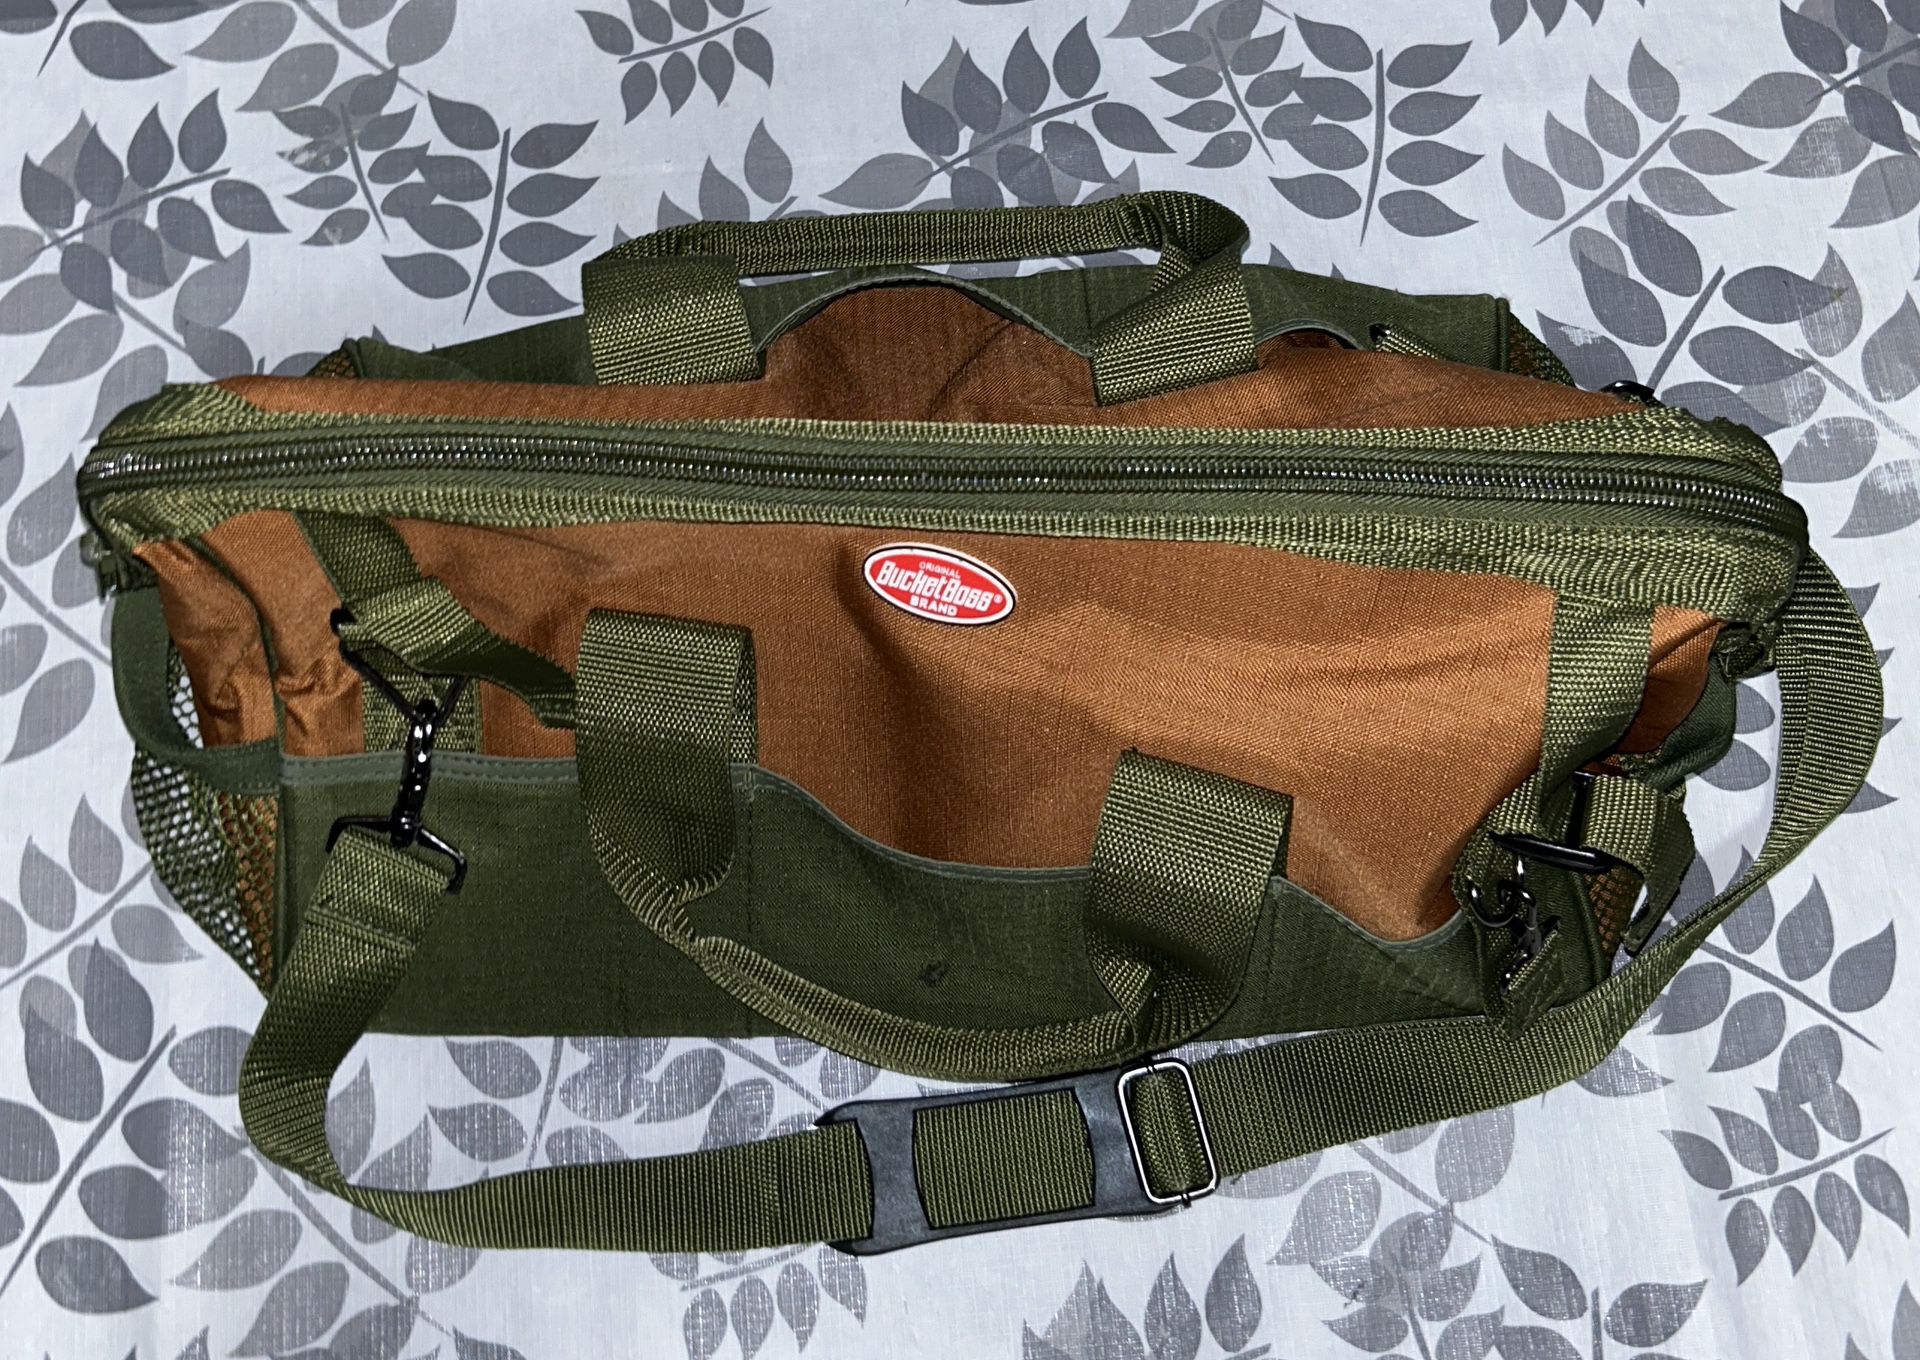 Large Tool Bag Original BucketBoss Brand-Tool Bag in Brown and Green.